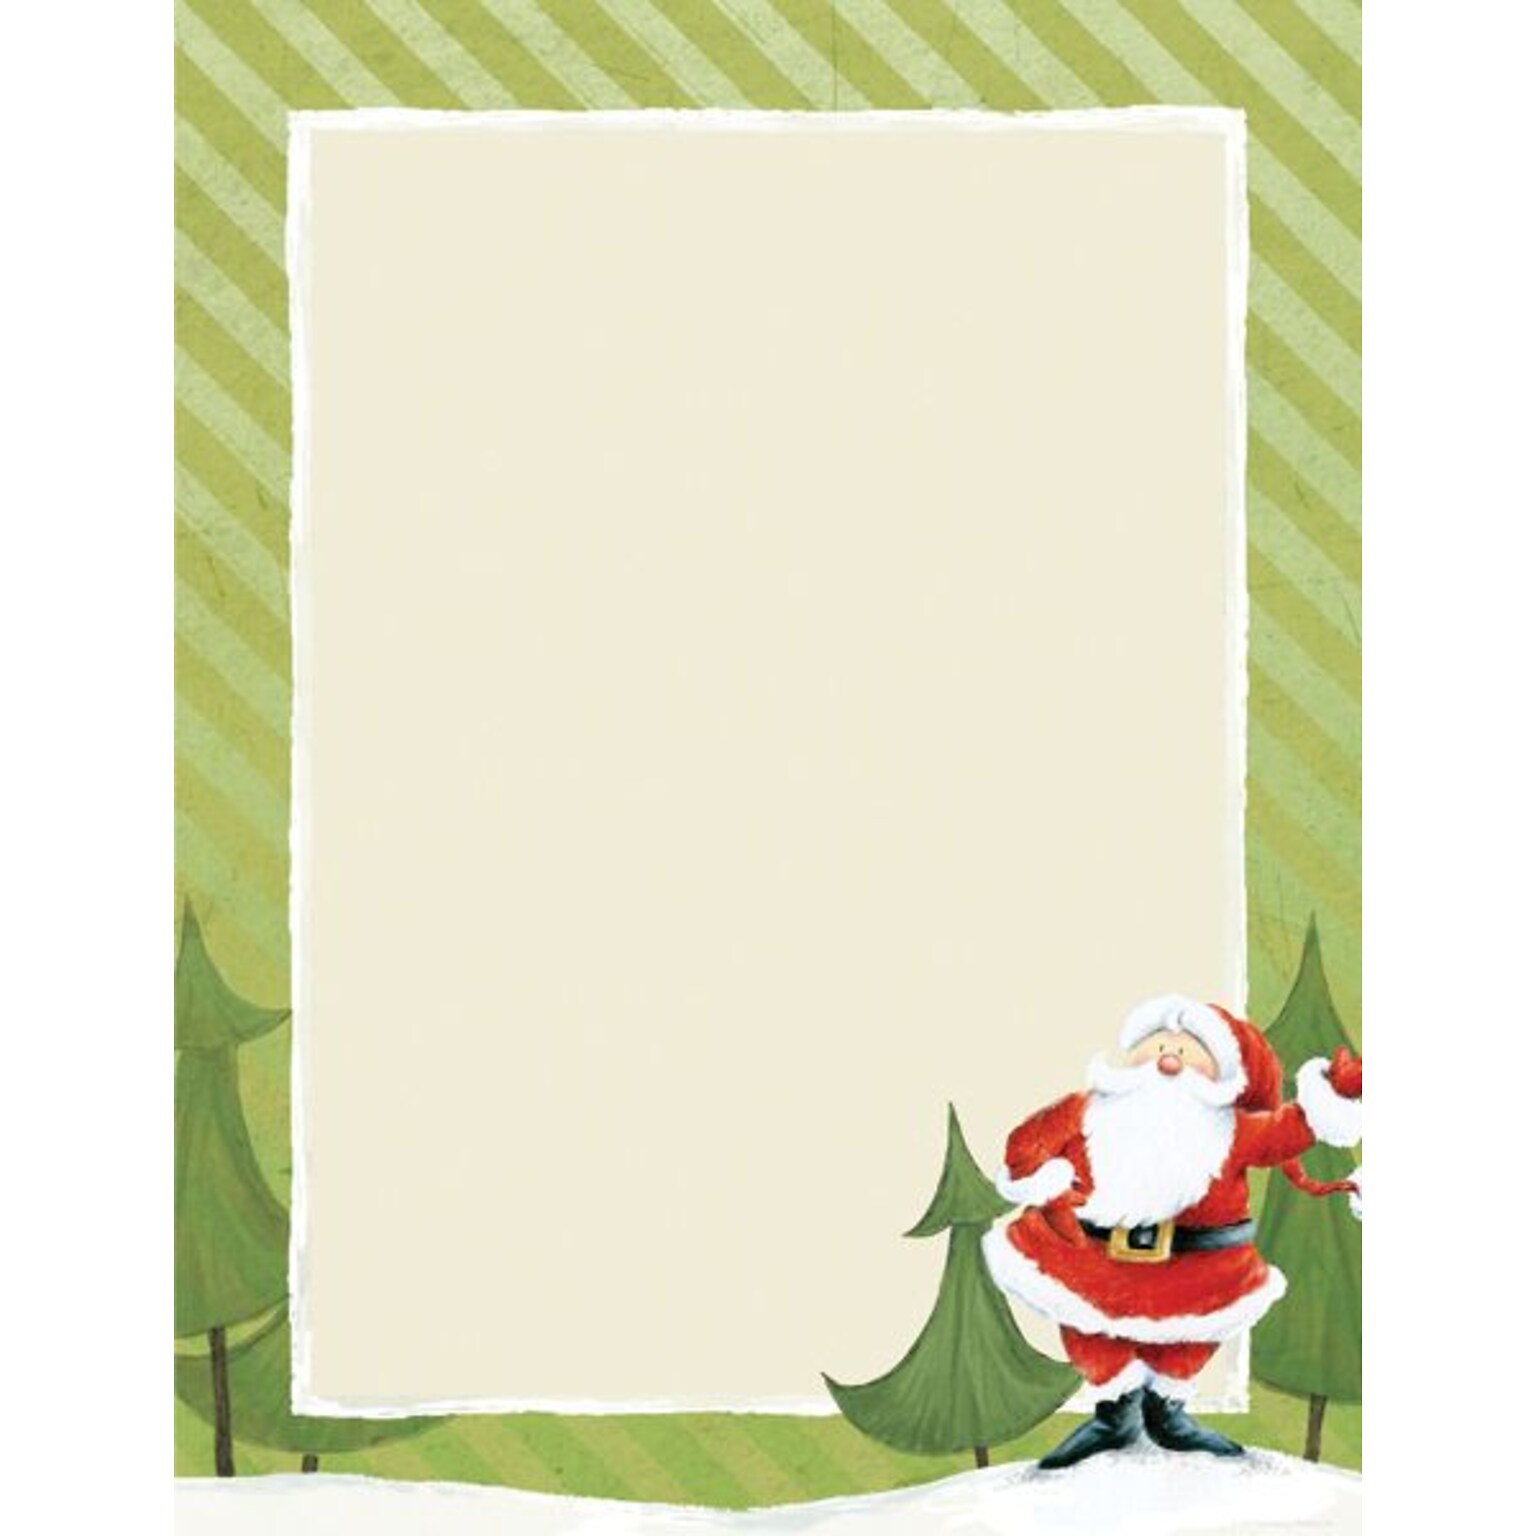 Masterpiece Studios Great Papers! Jolly Santa Claus Stationery, Green Stationery with Santa Claus Design, 8 1/2 x 11, 80/Pk